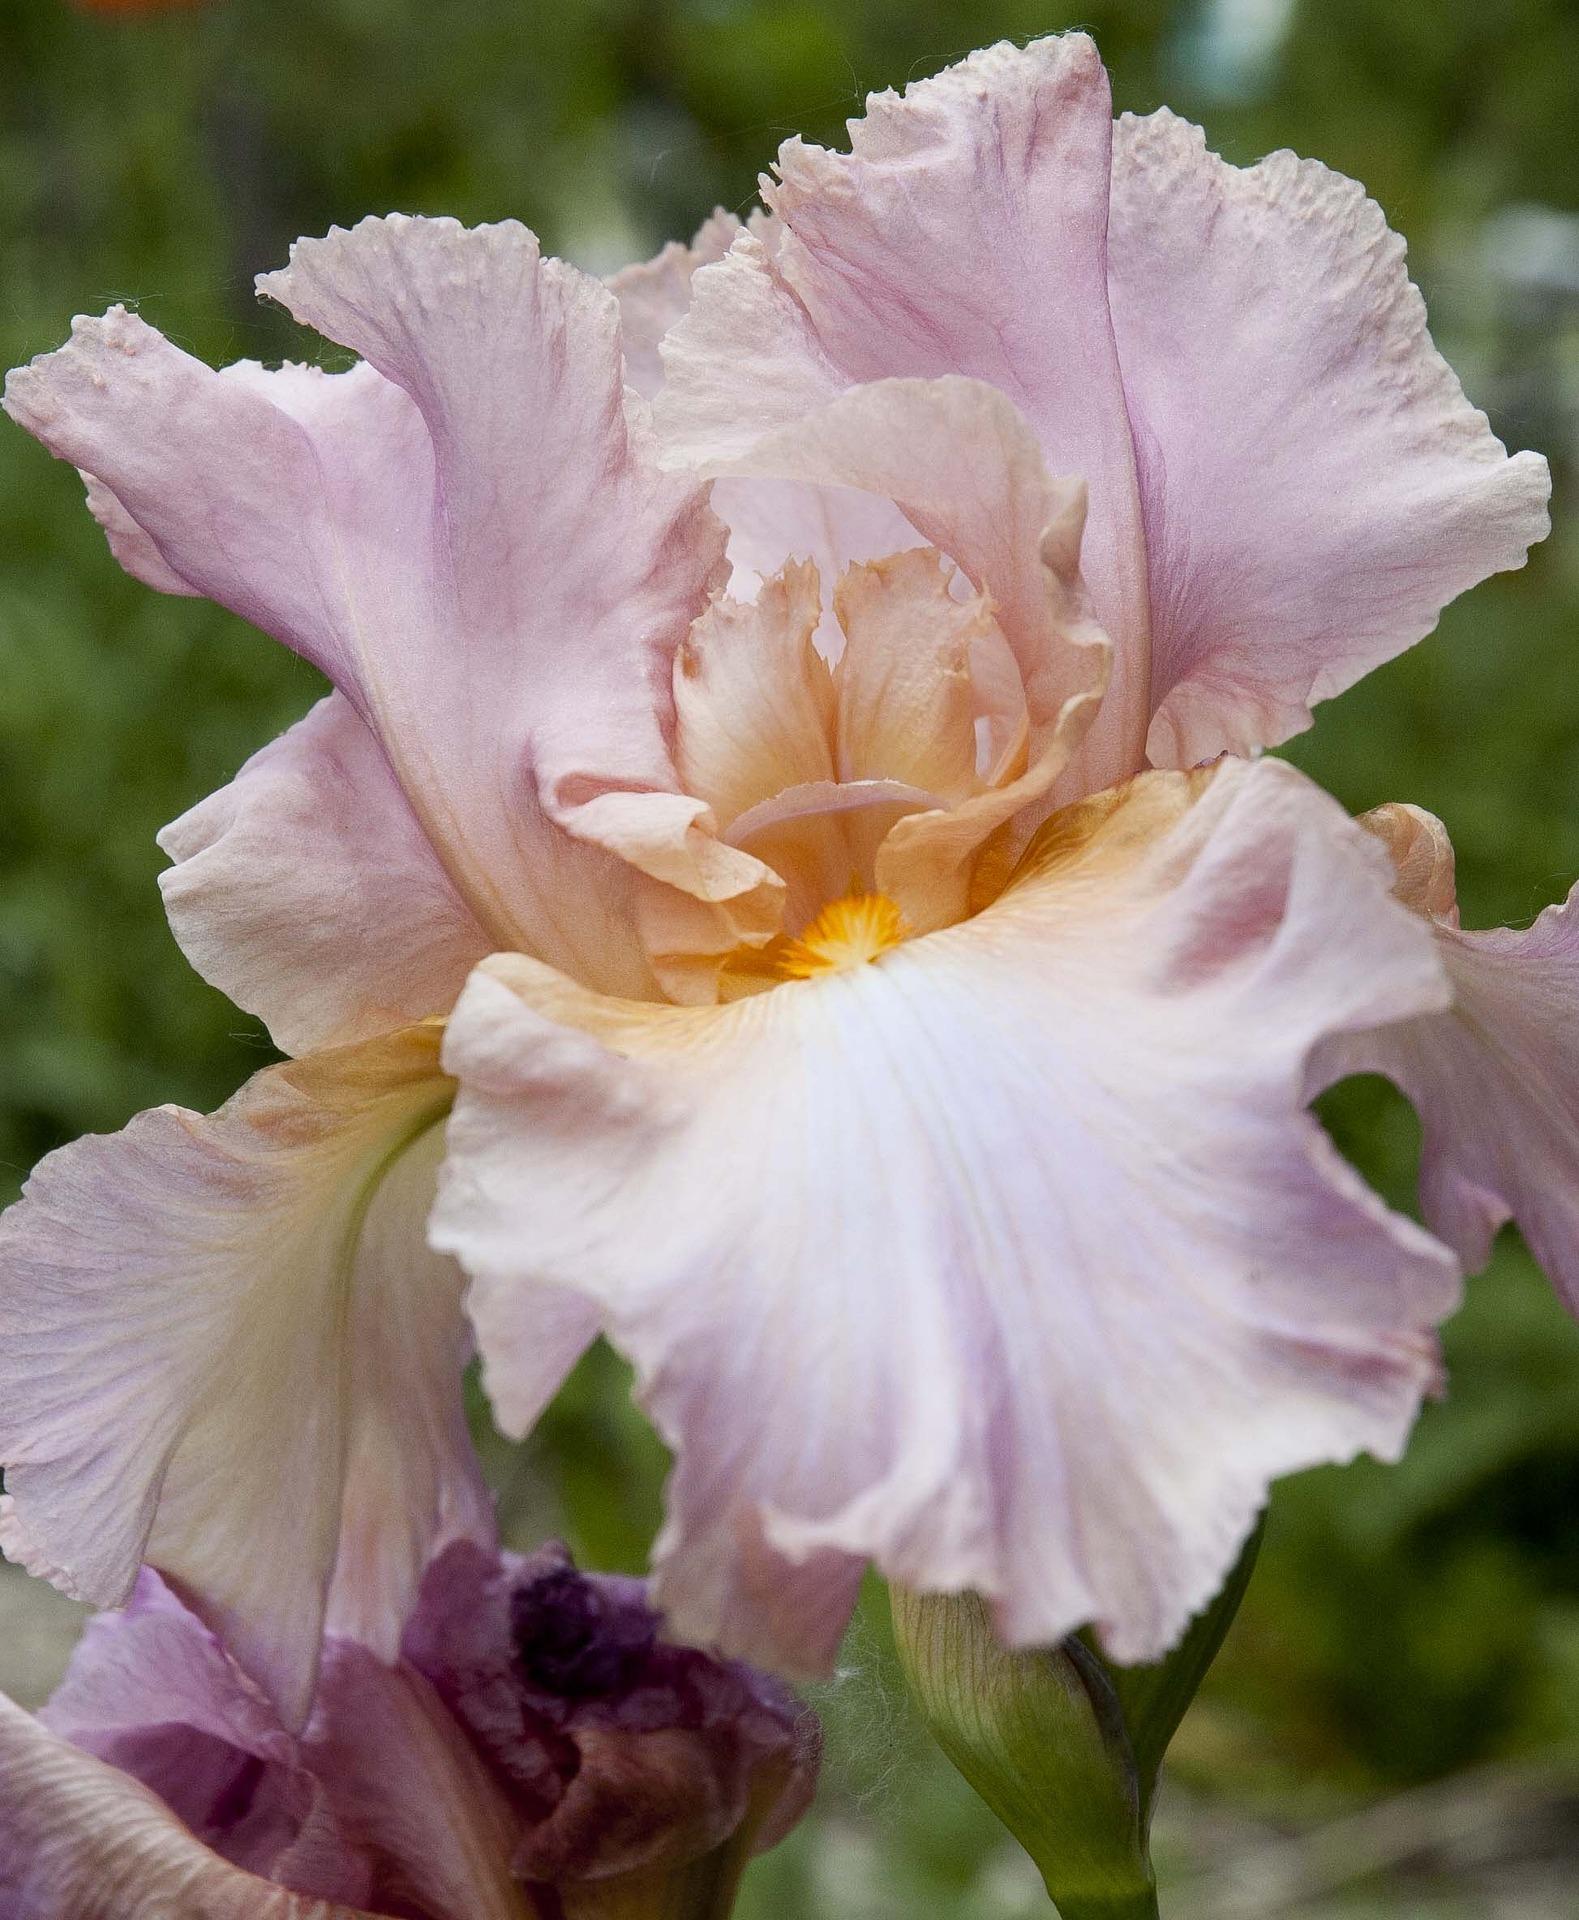 Iris Germanica 'Pink' - Tall Bearded Iris from Leo Berbee Bulb Company